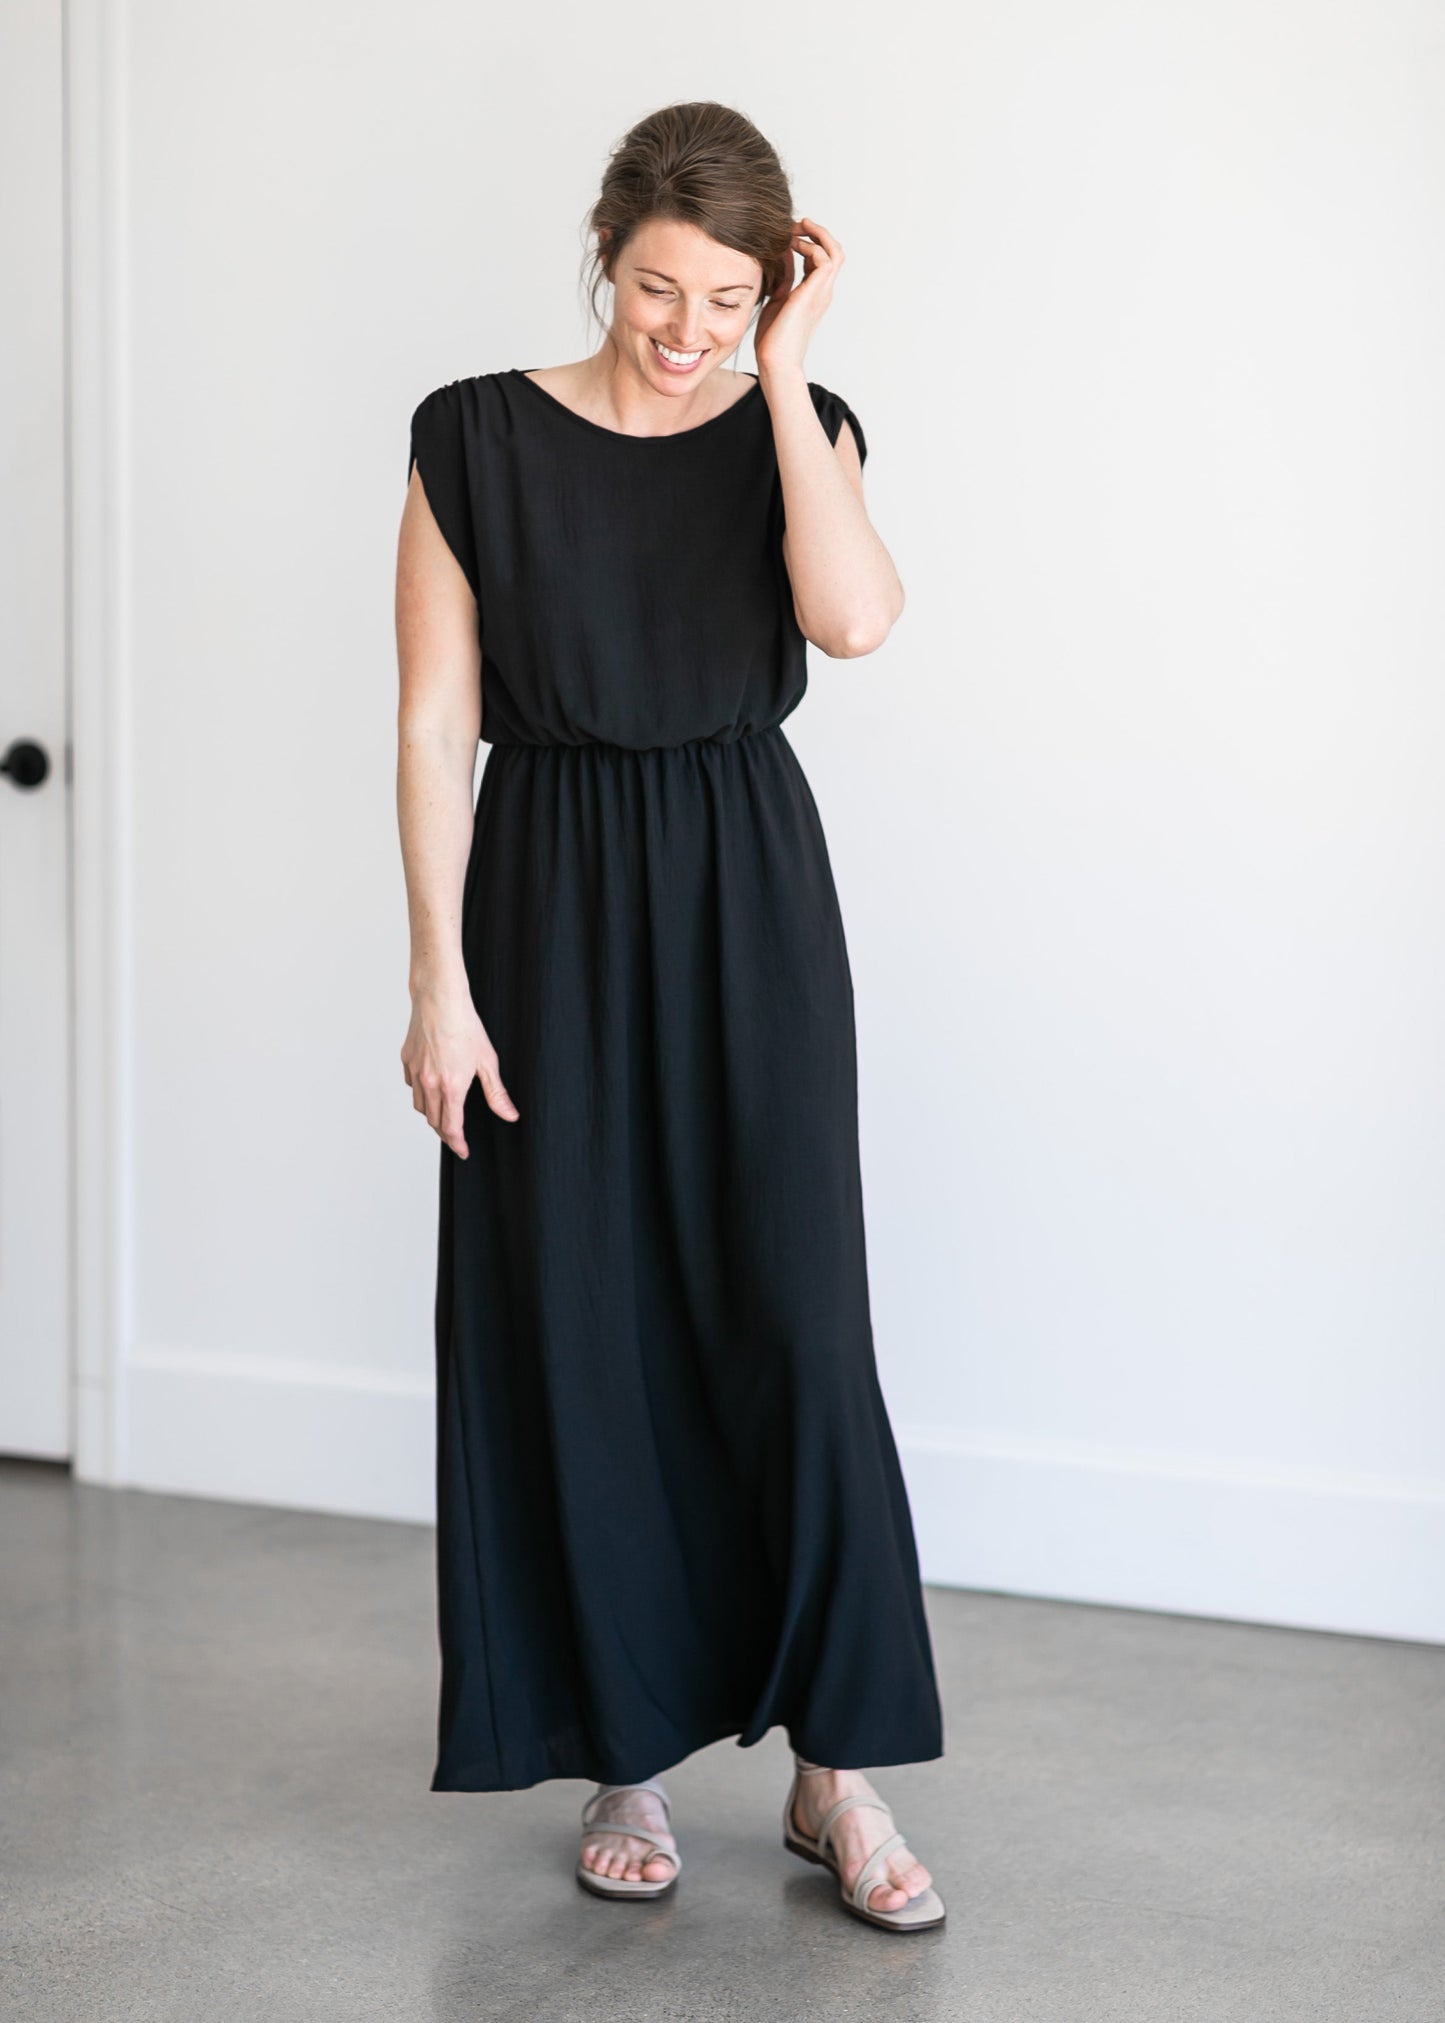 Woven Black Maxi Dress Dresses